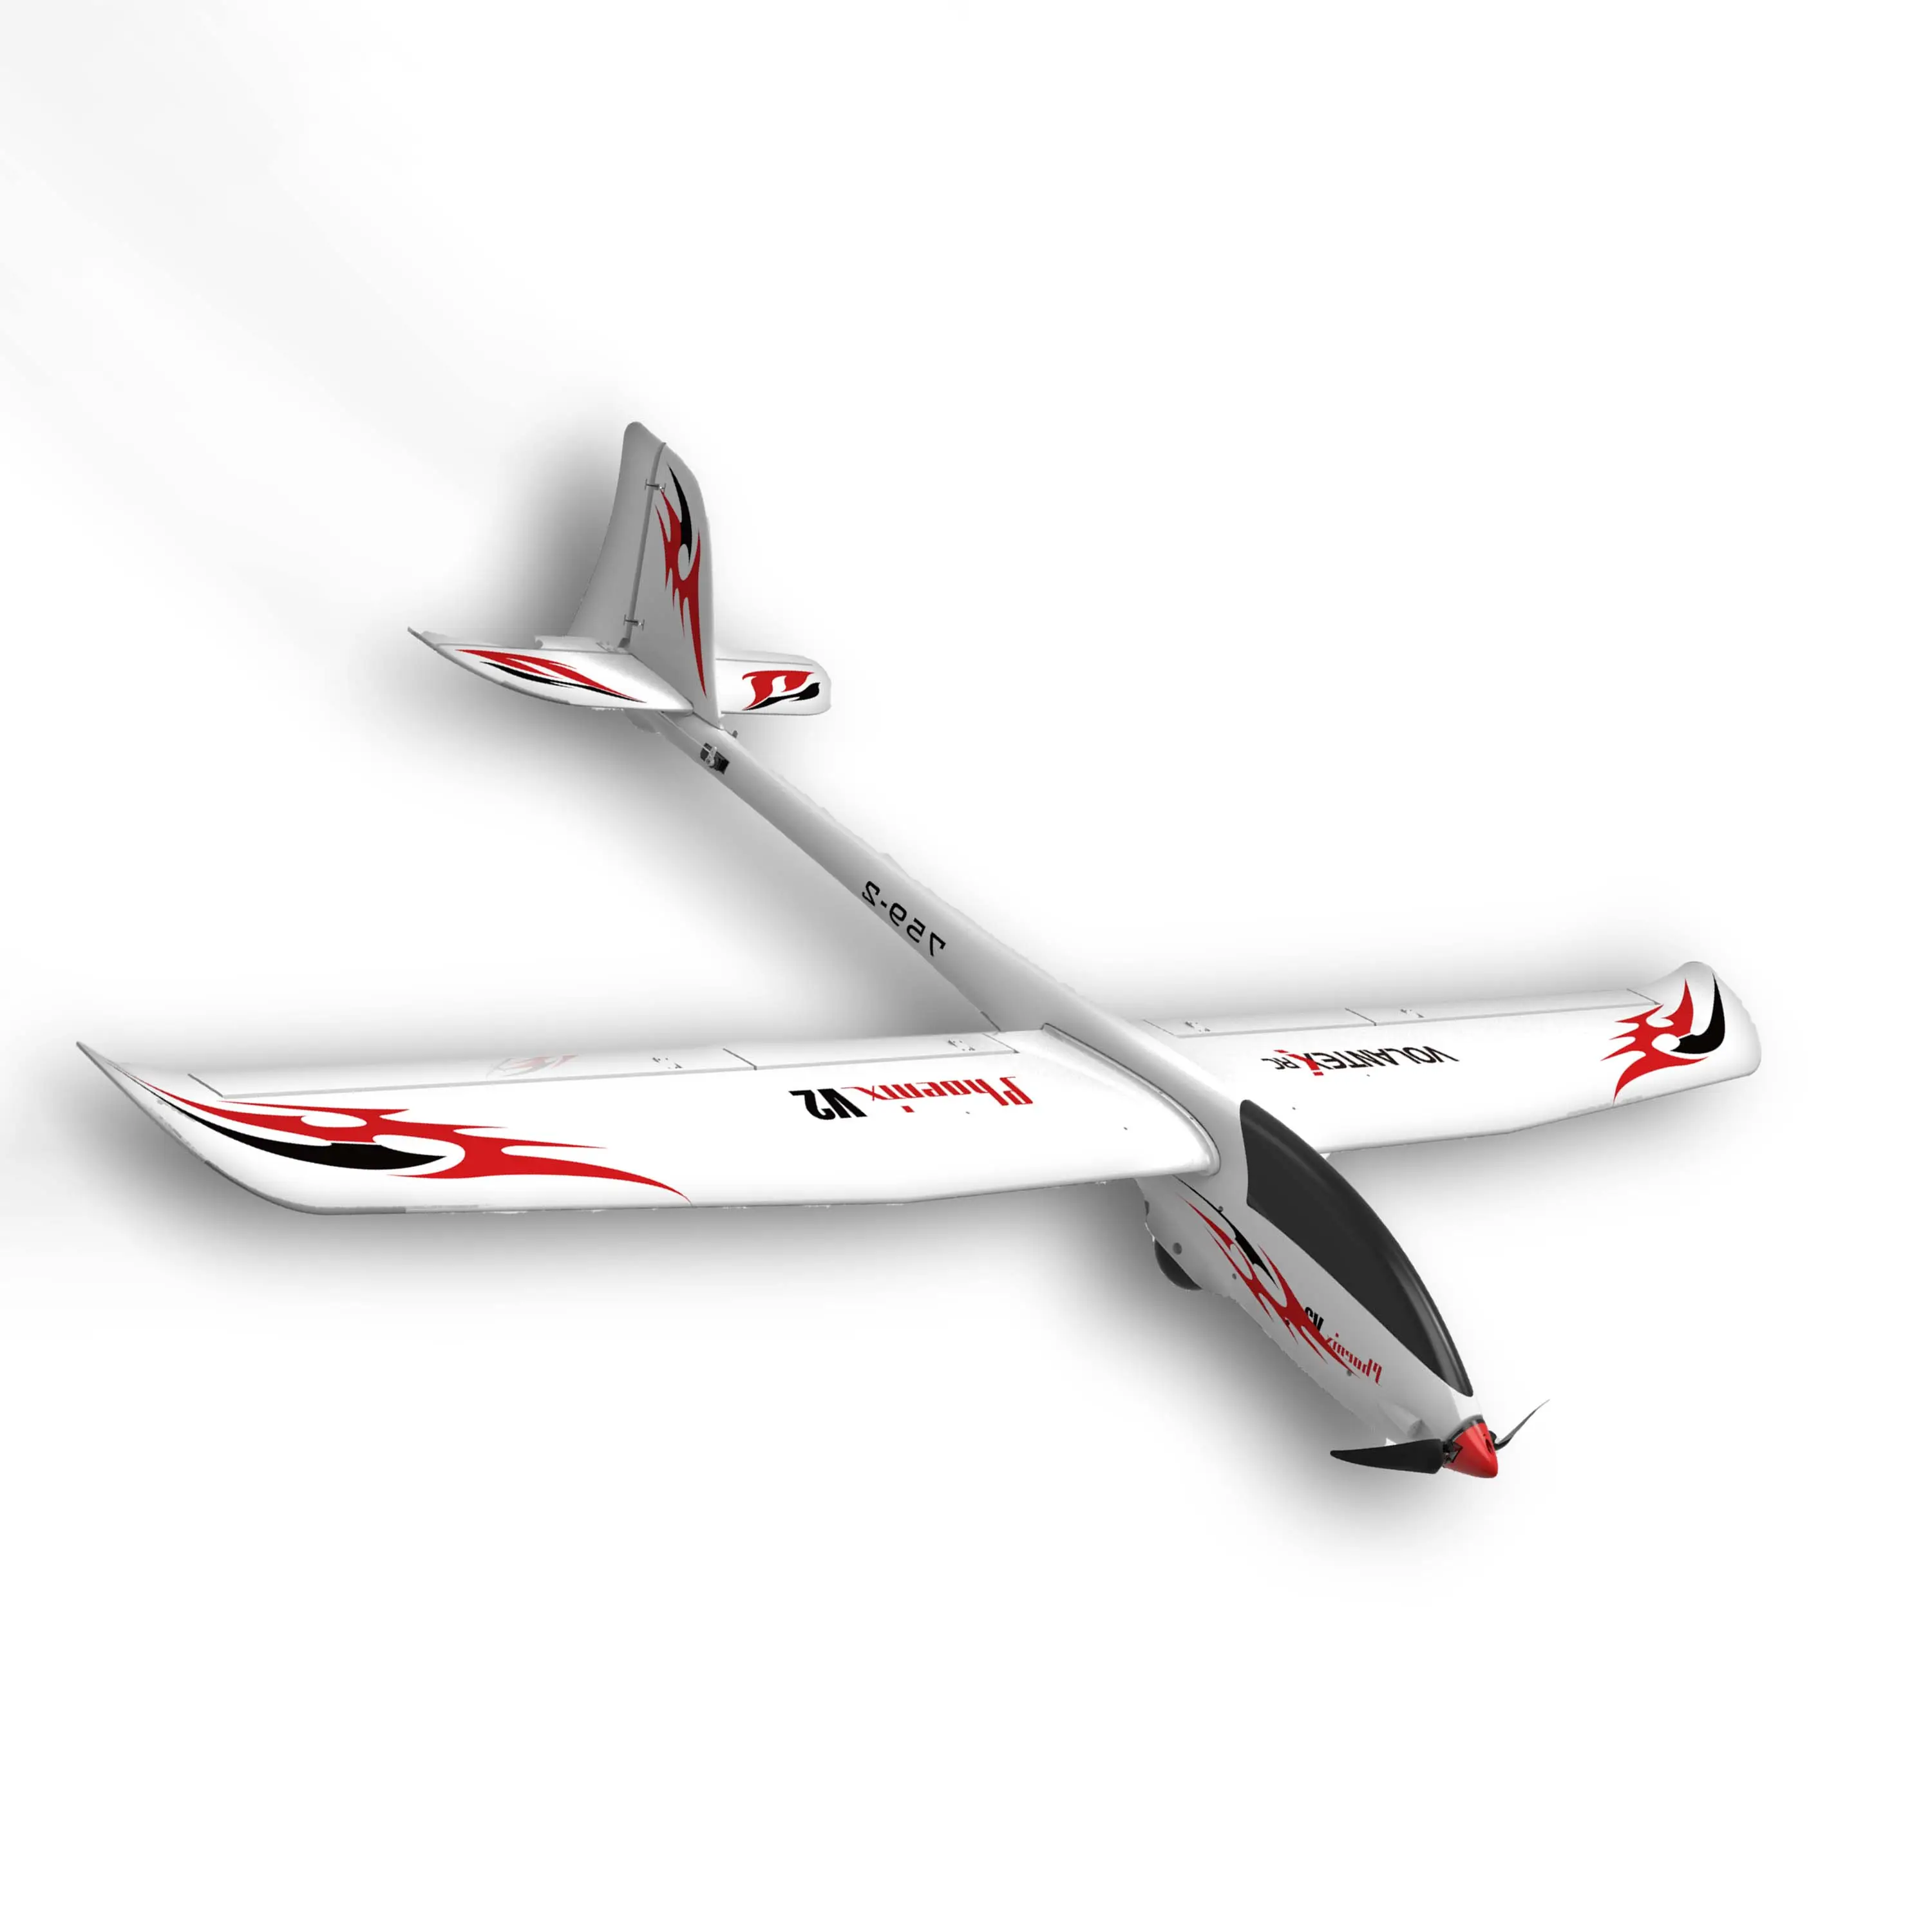 759-2 Brushless PNP Volantex 2M FPV rc model planes foam rc plane glider Aircraft toys